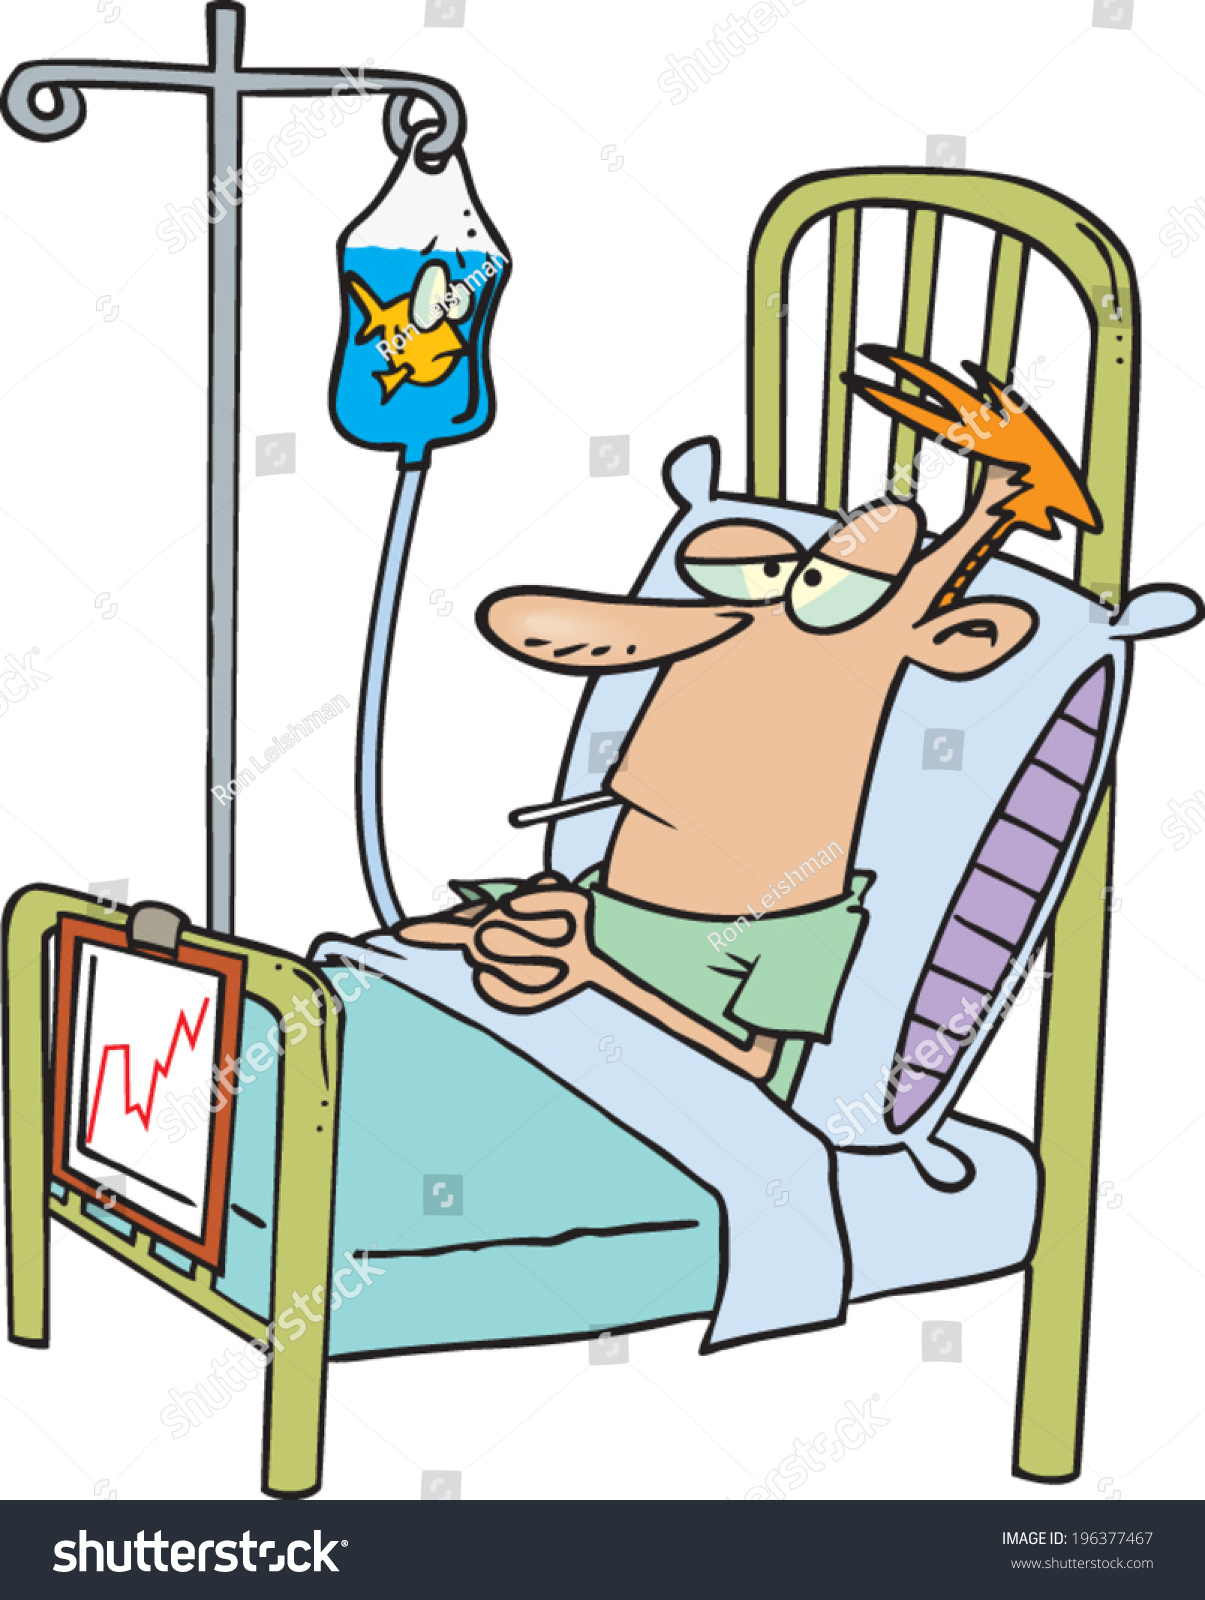 Hospital Bed Cartoon